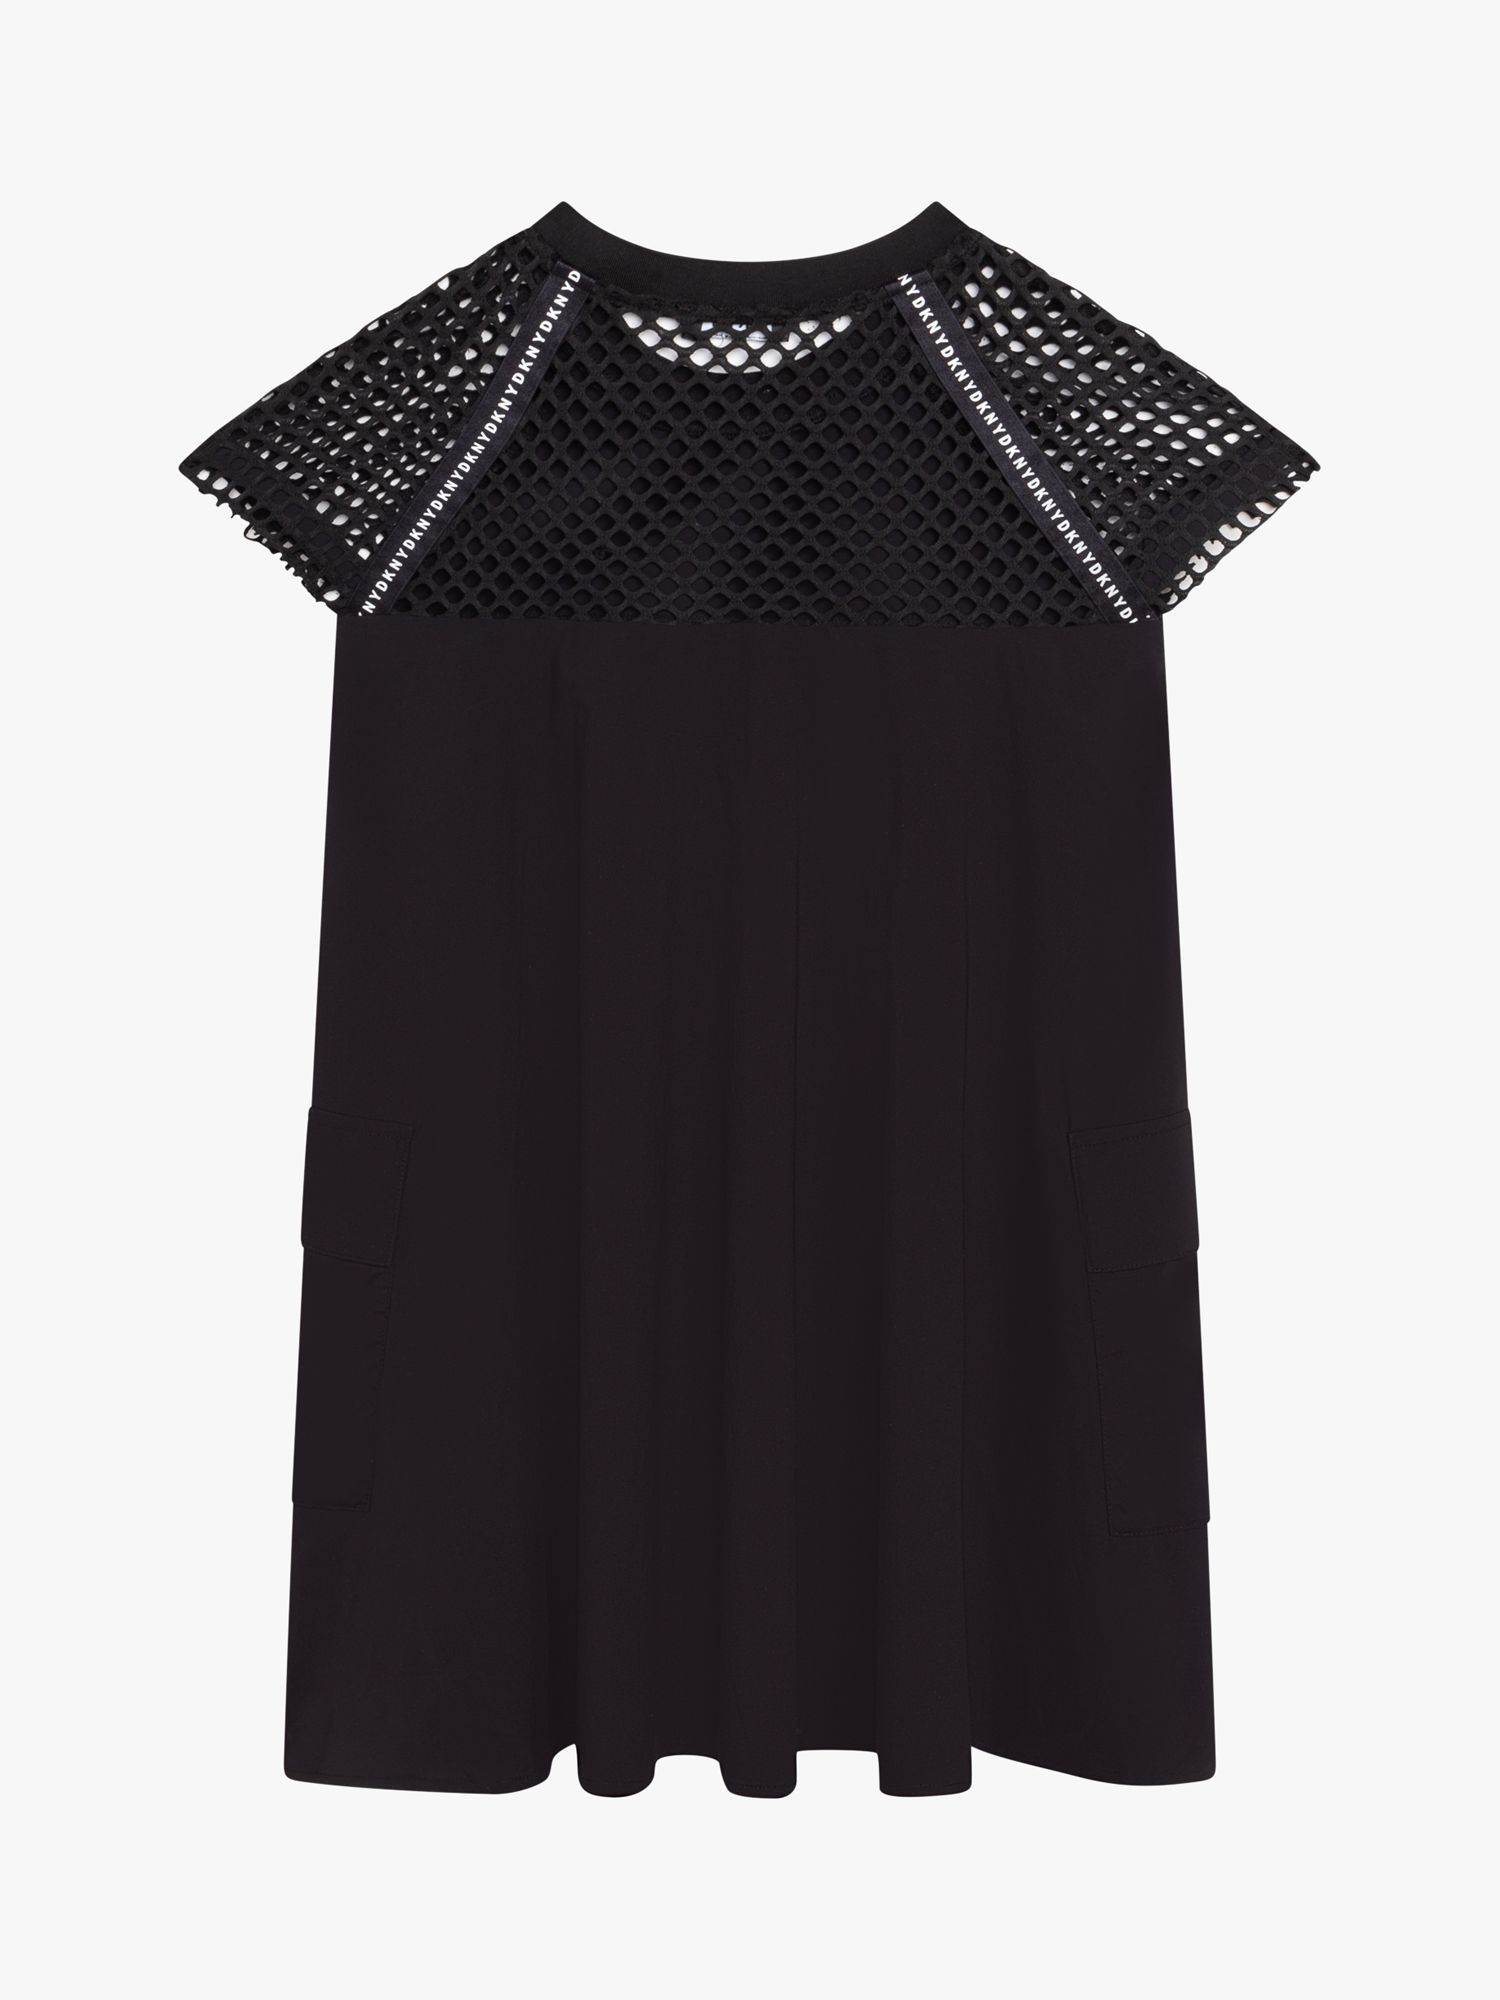 Buy DKNY Kids' Mesh Sleeve Dress, Black Online at johnlewis.com